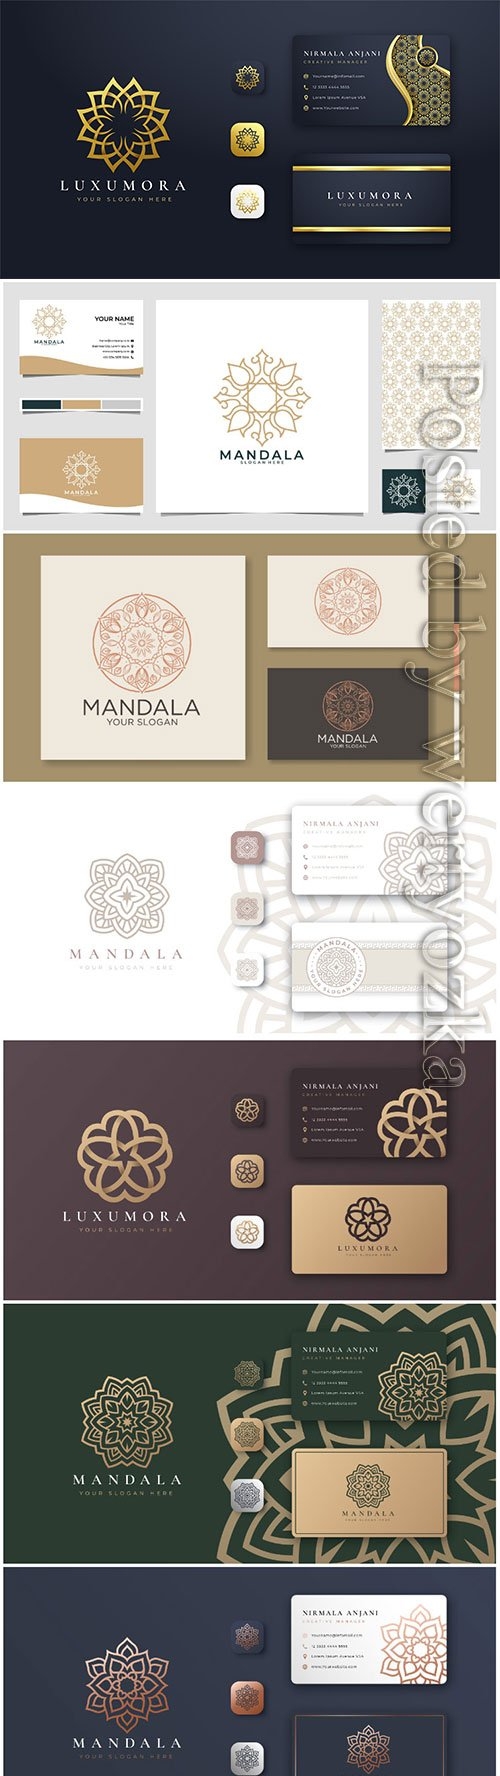 Download Golden mandala logo with business card premium vector ...